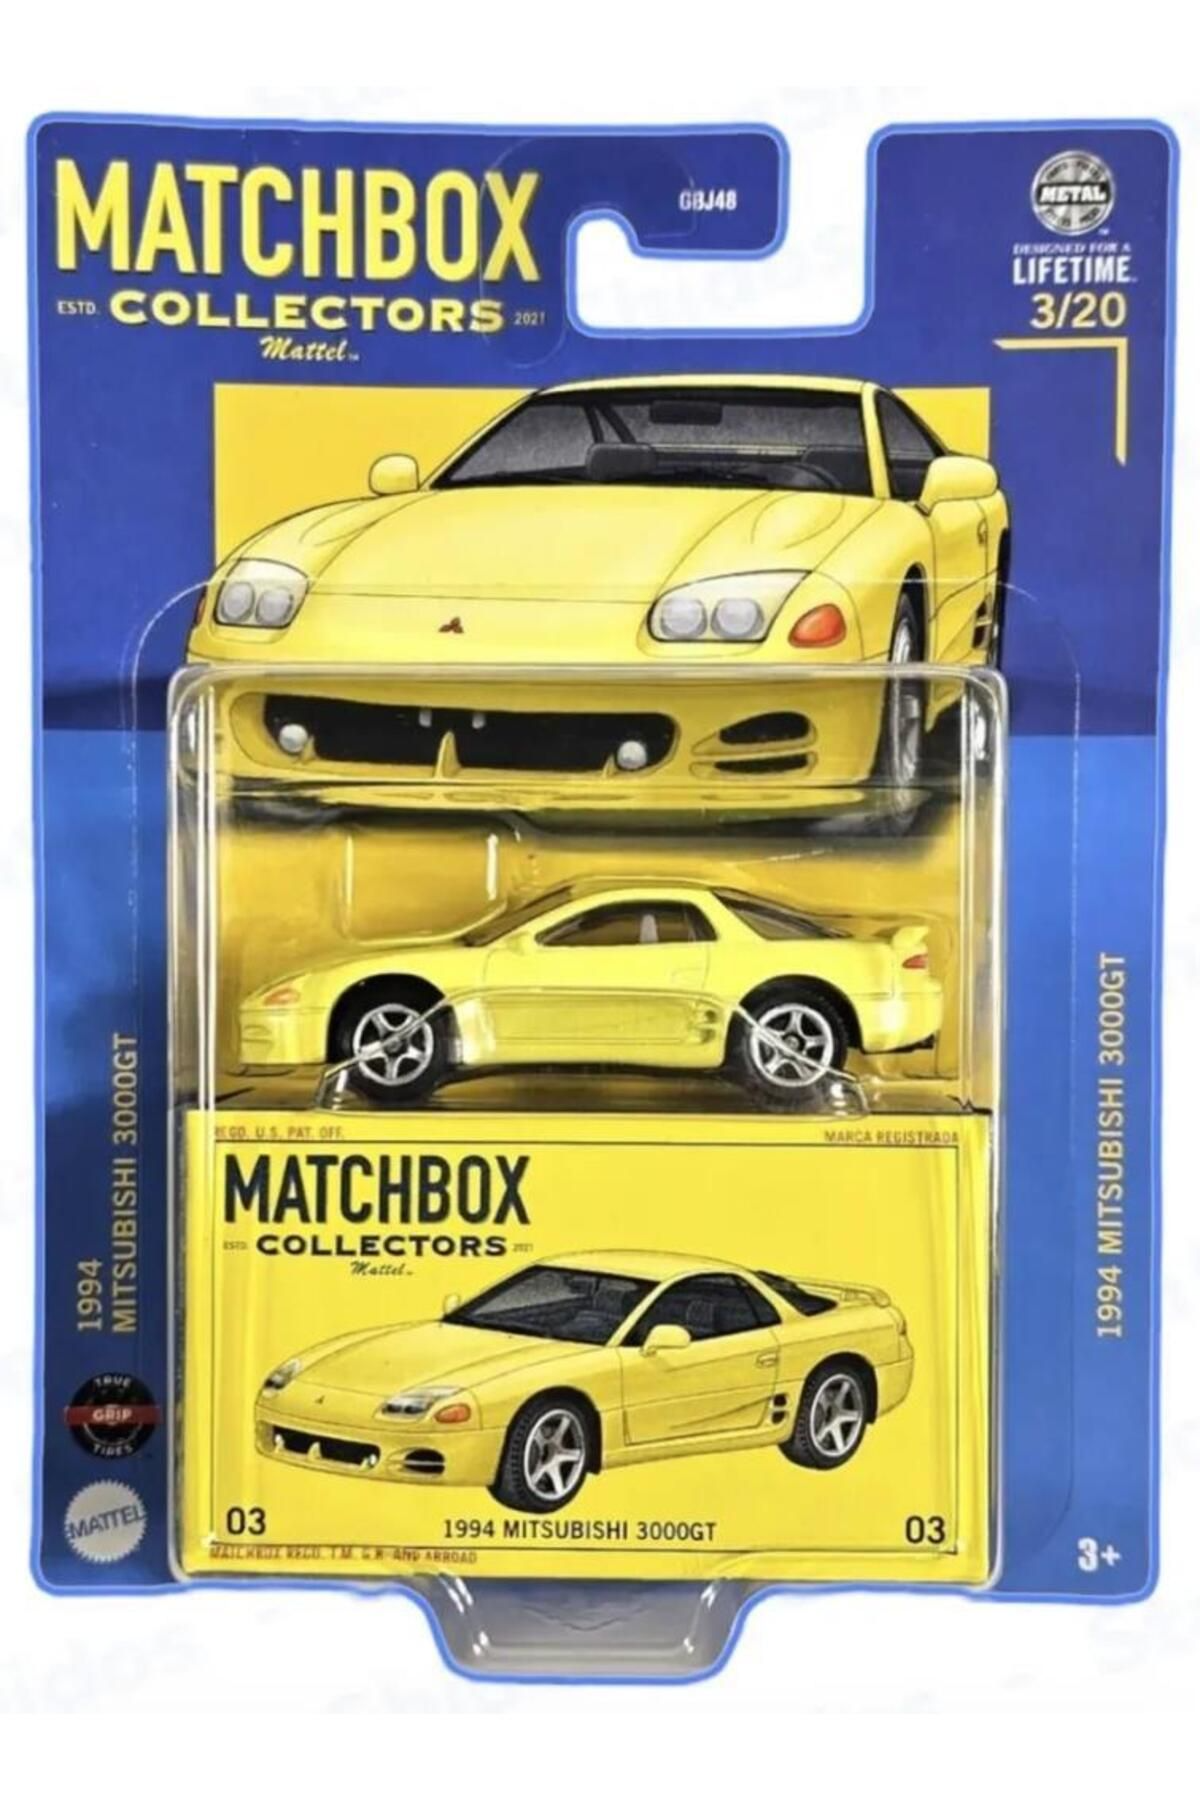 1994 Mitsubishi 3000GT Matchbox Koleksiyon Araçları Serisi GBJ48